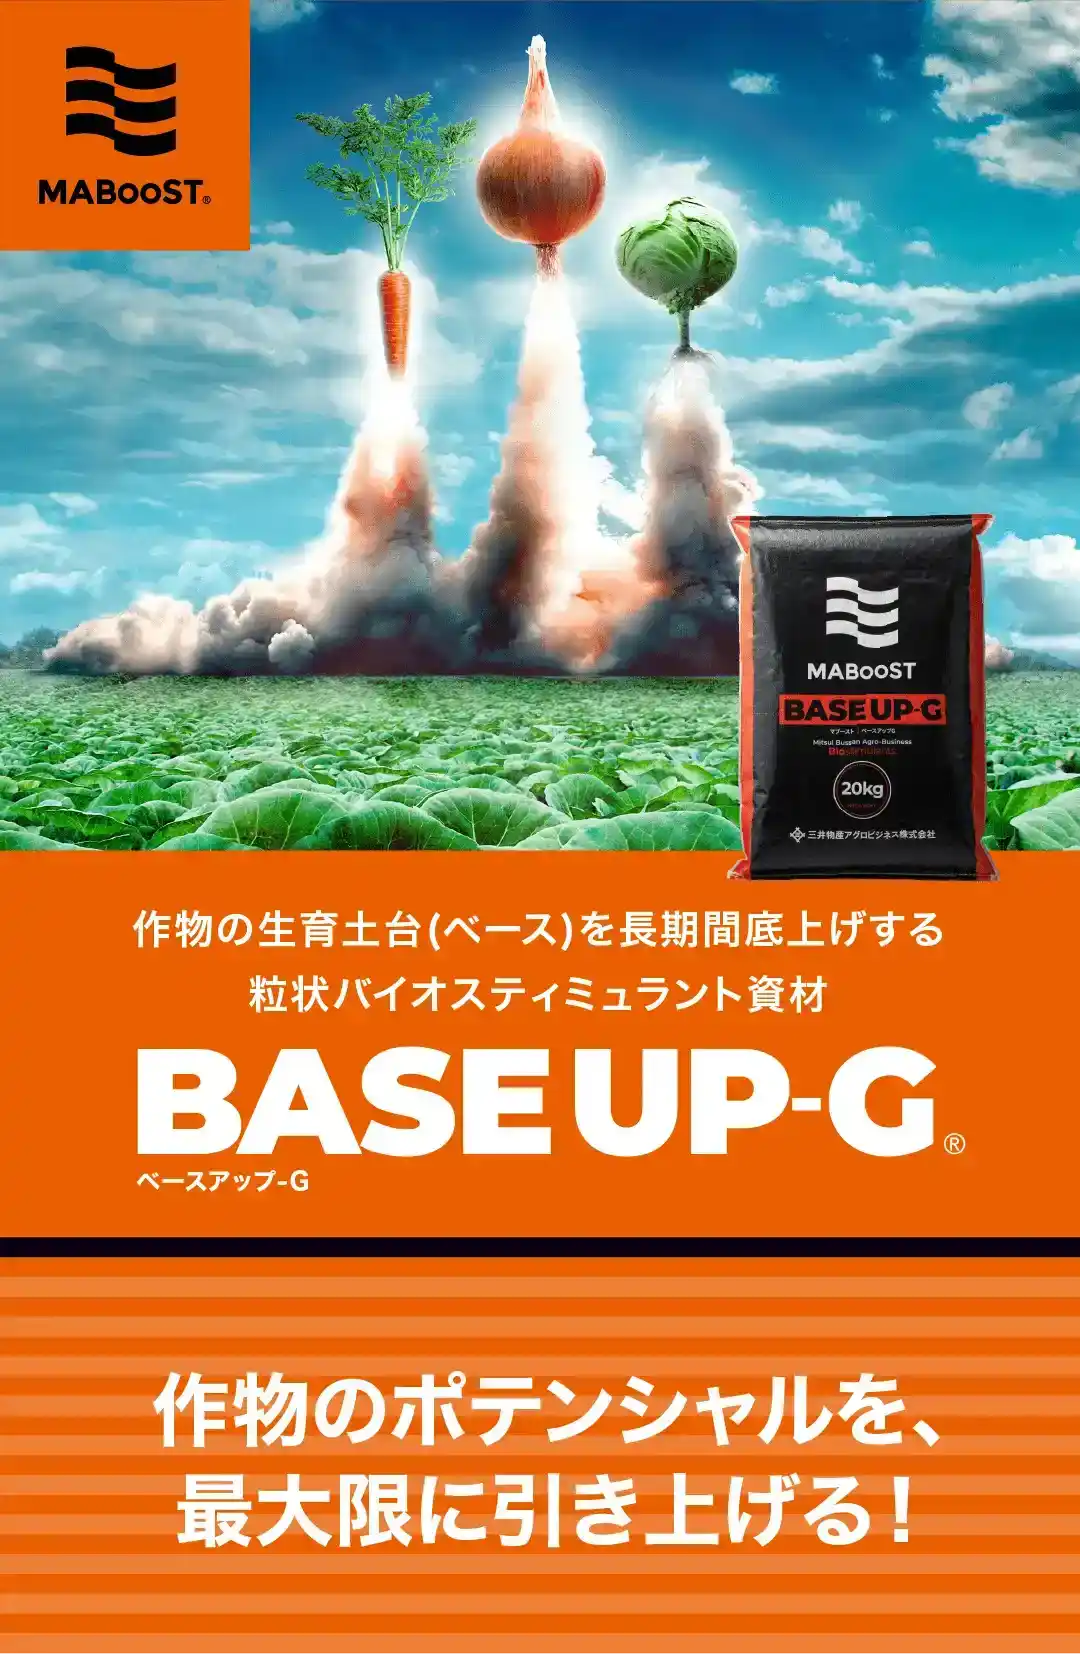 BASE UP-Gの肥料